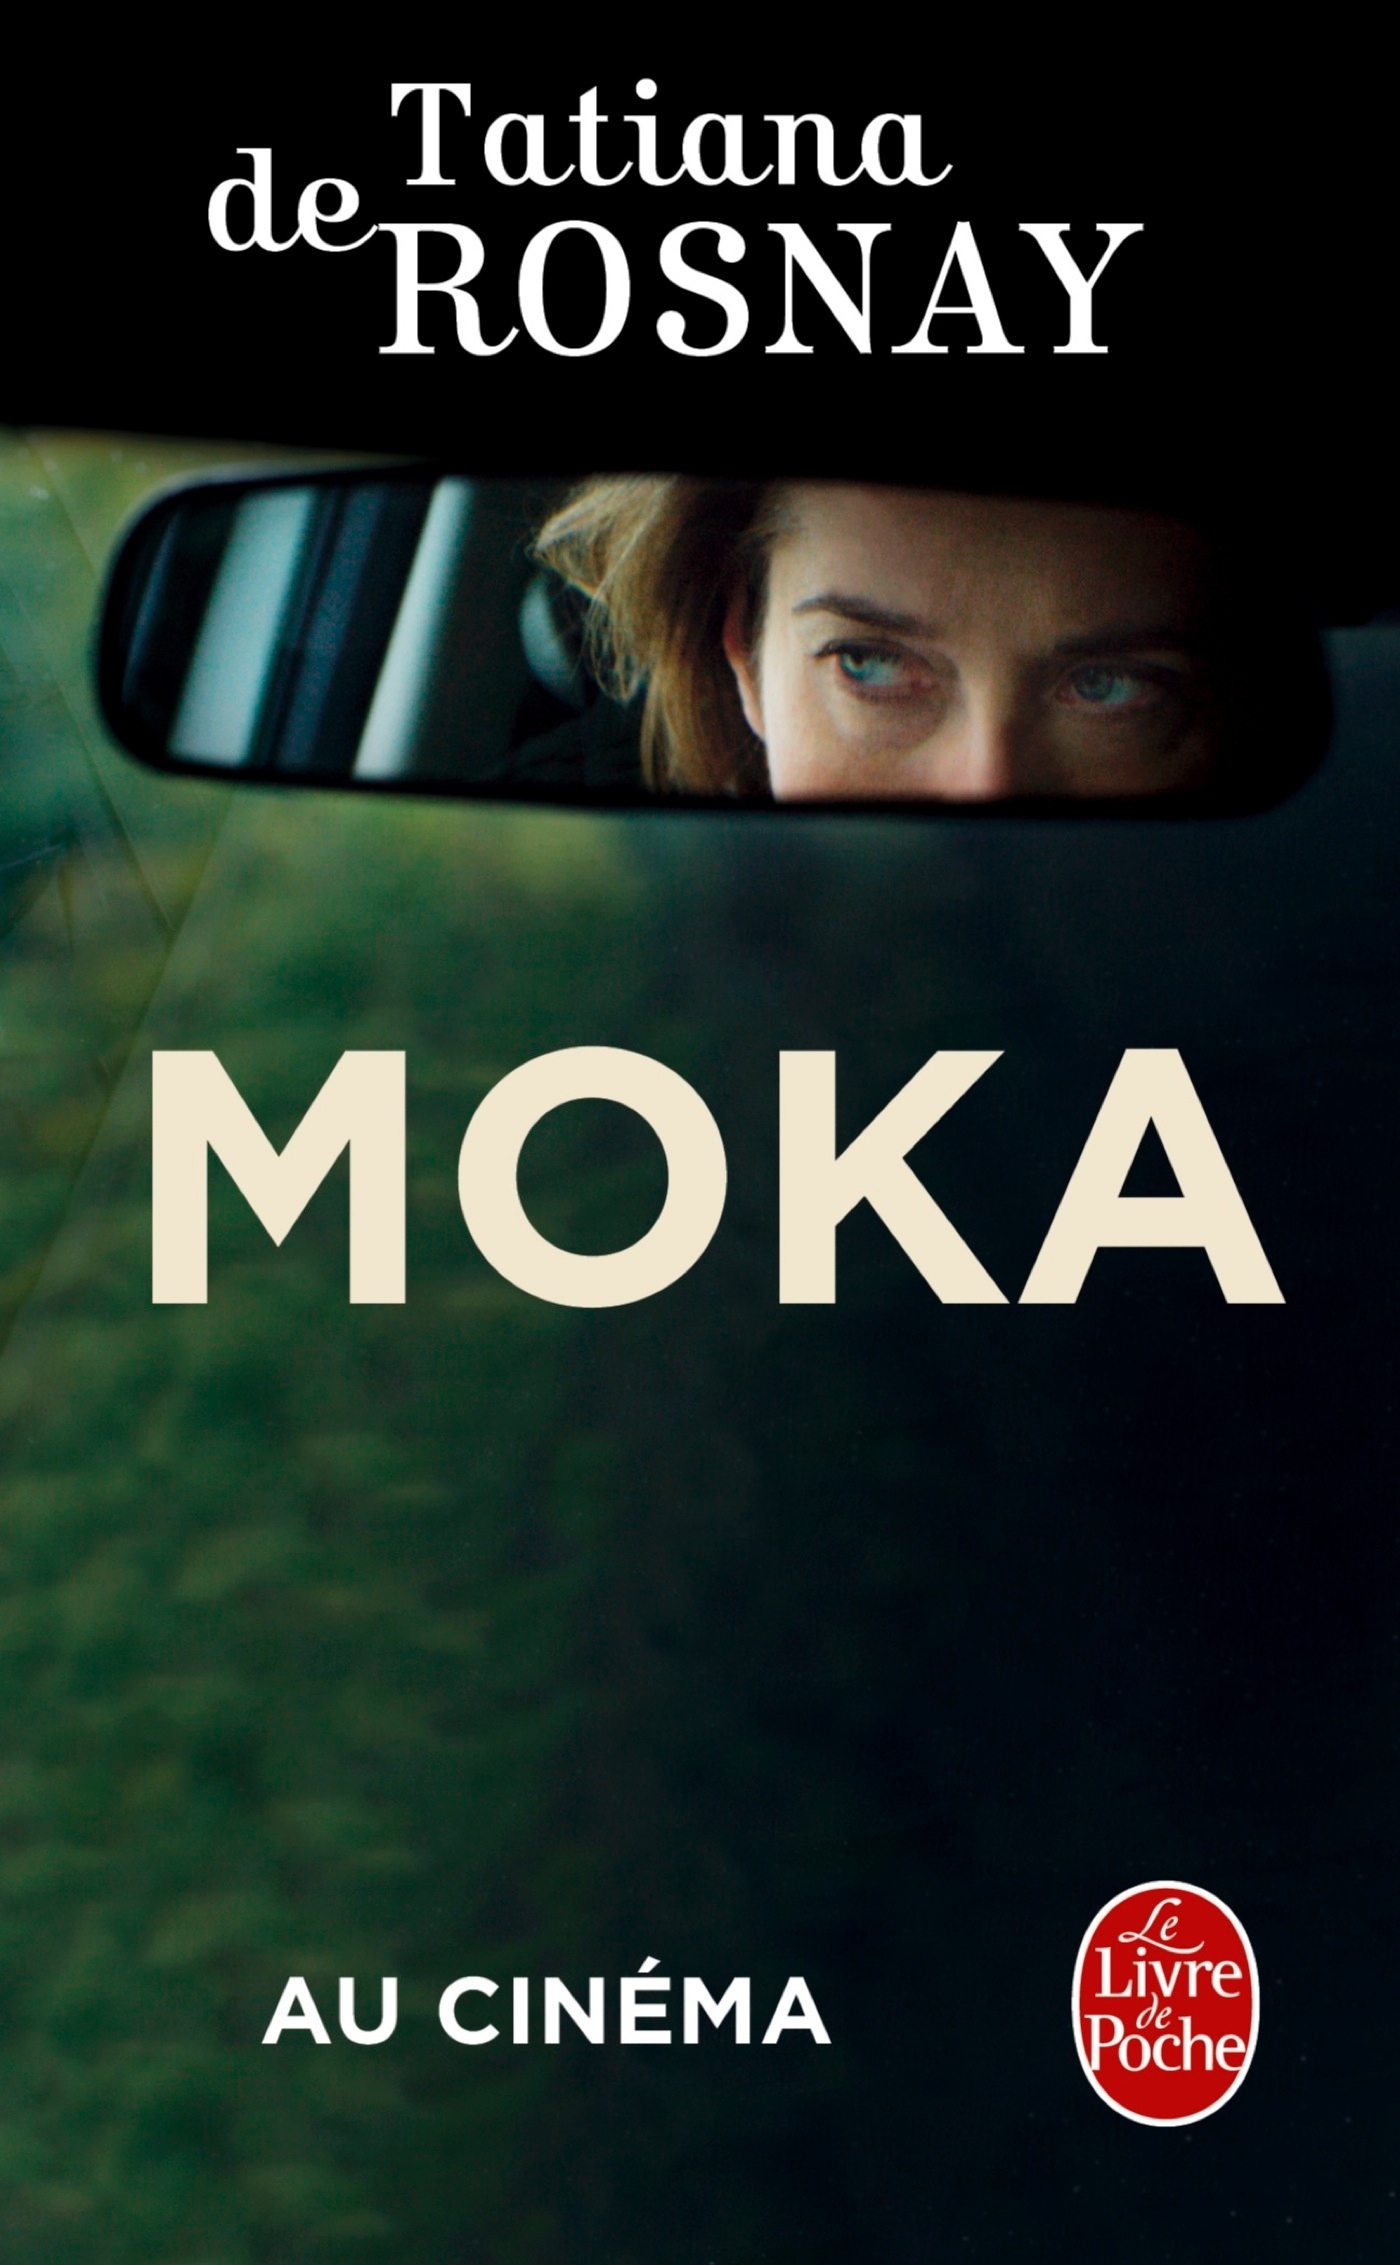 Moka (9782253125693-front-cover)